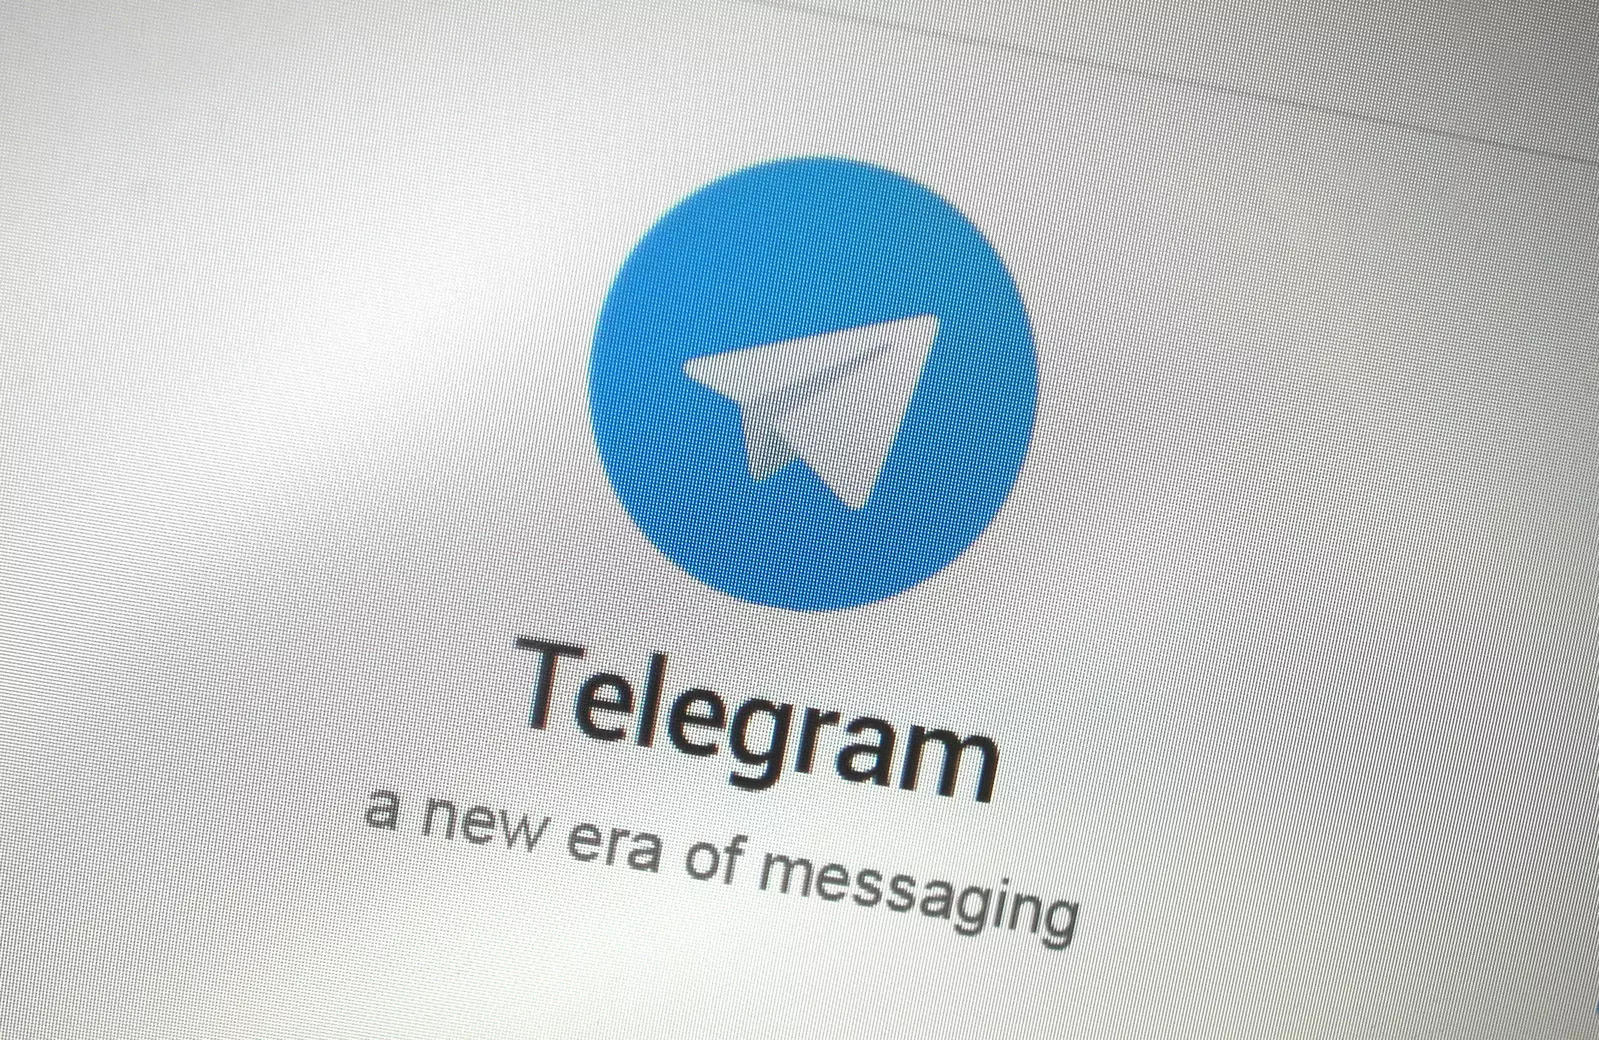 Hackers create ChatGPT-driven Telegram bots that can write malware